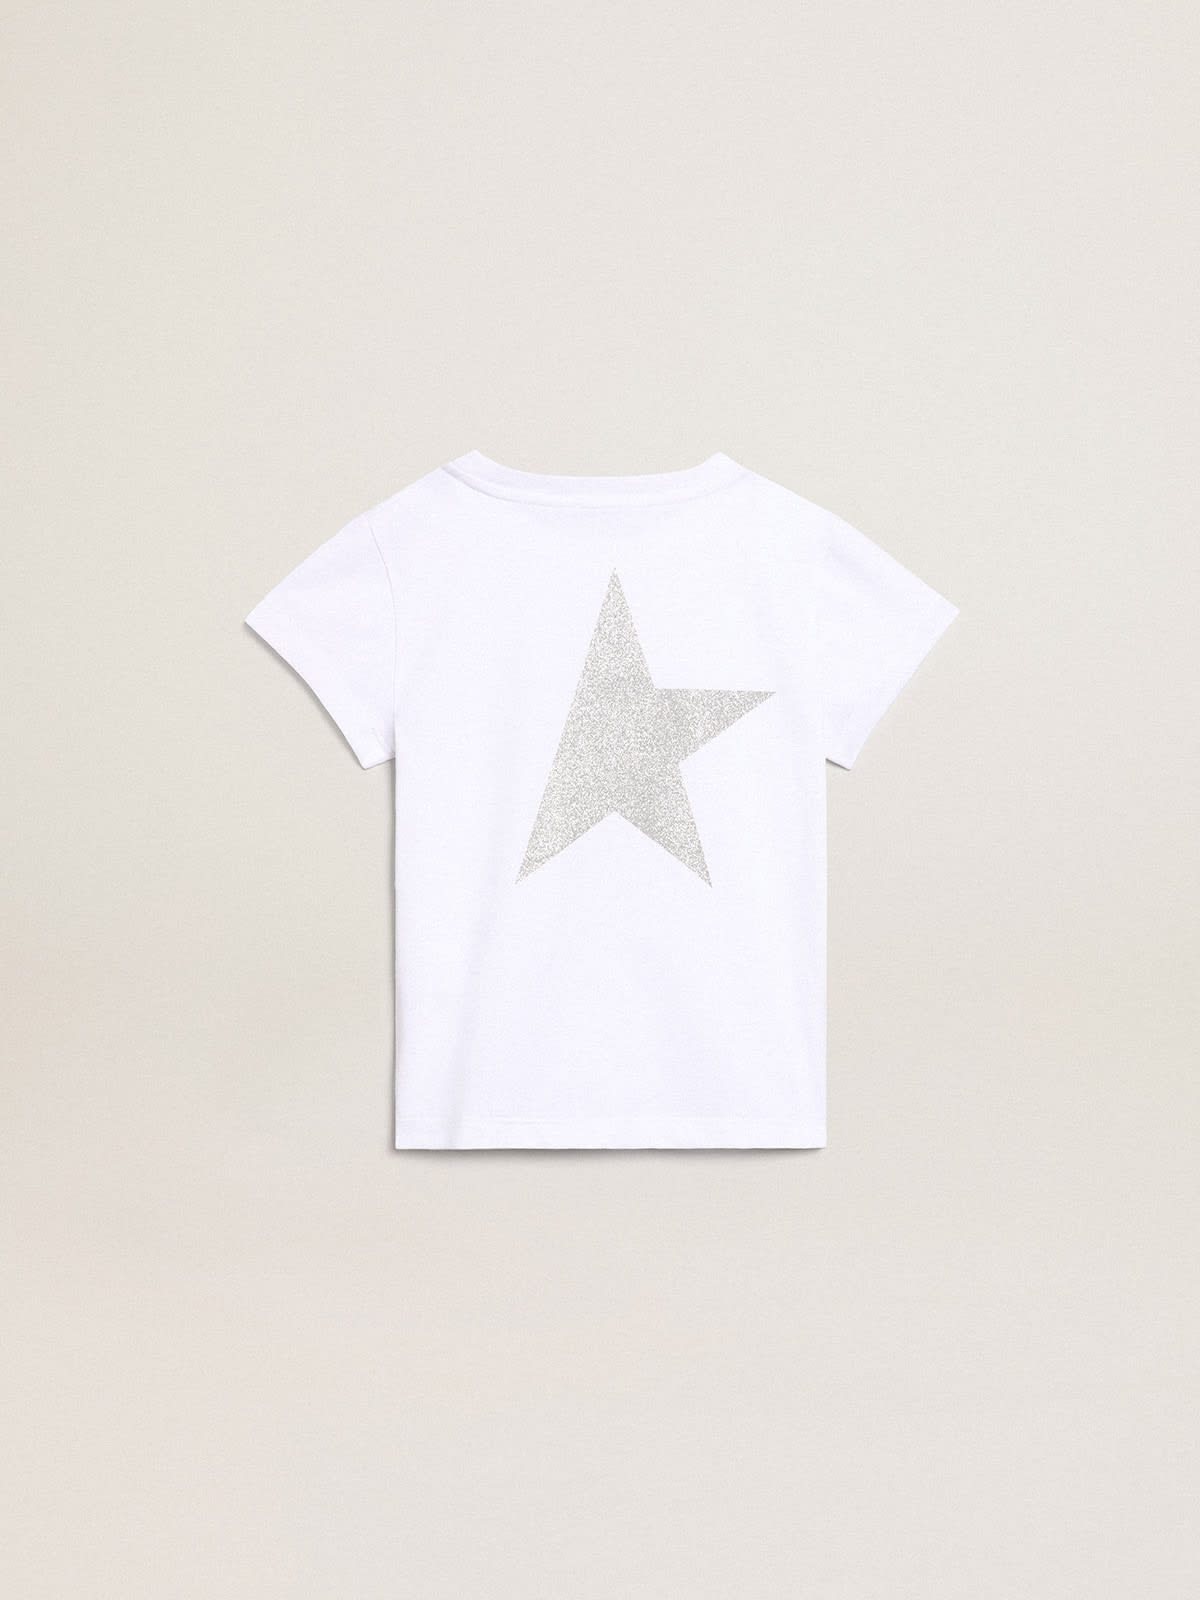 Golden Goose - Camiseta branca e prateada com logo e maxi estrela de glitter prateado in 